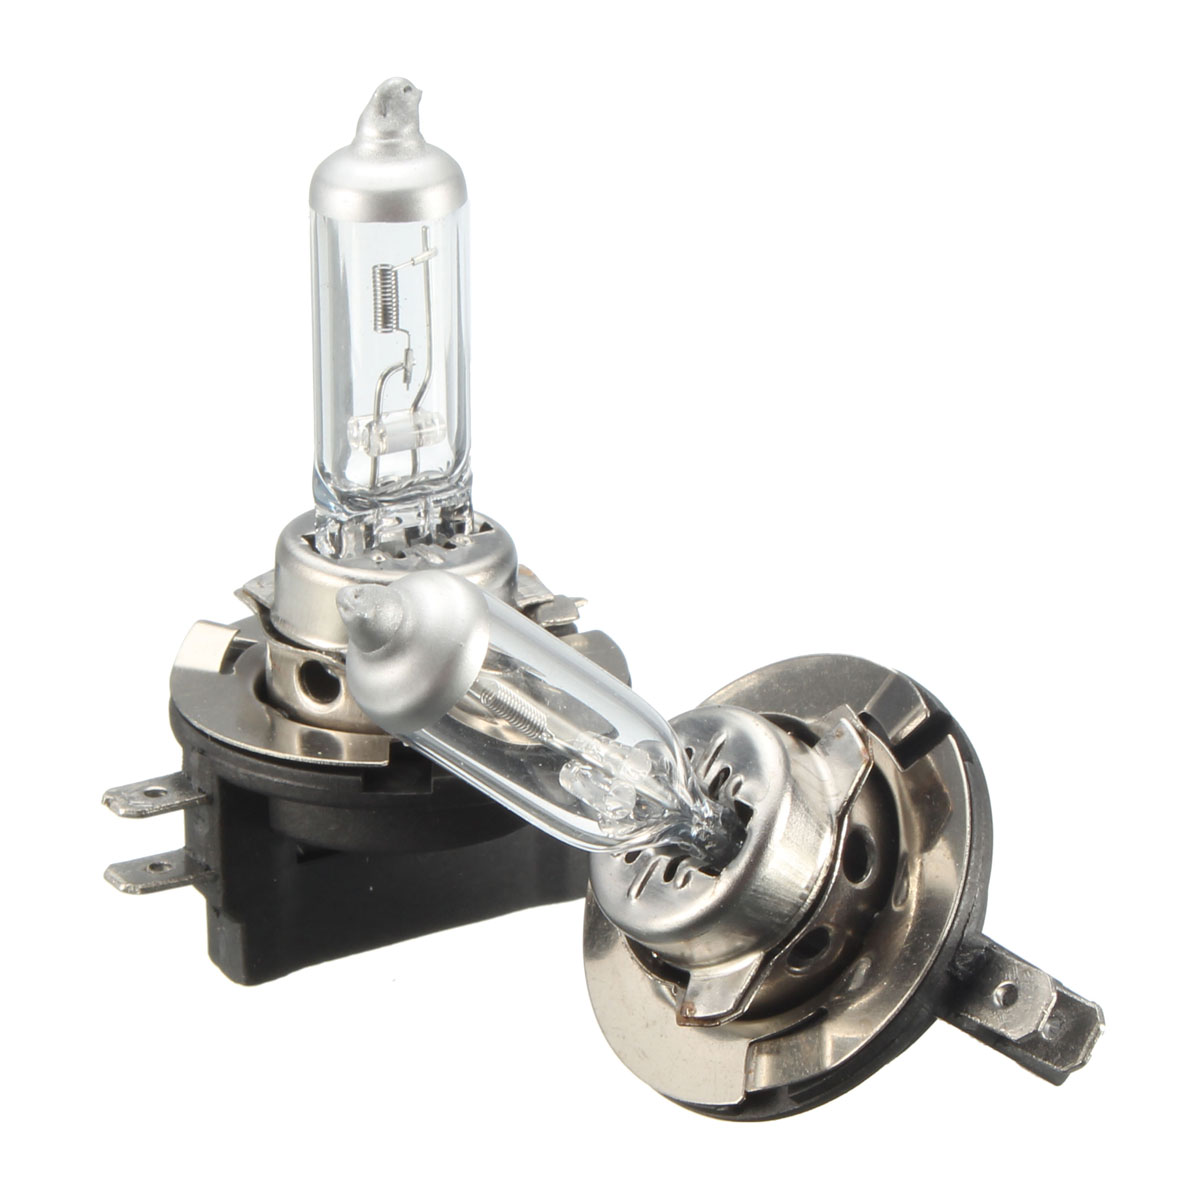 2-x-55W-12V-3000K-H11B-Halogen-Headlight-Light-Lamp-Clear-Bulbs-Replacement-1057350